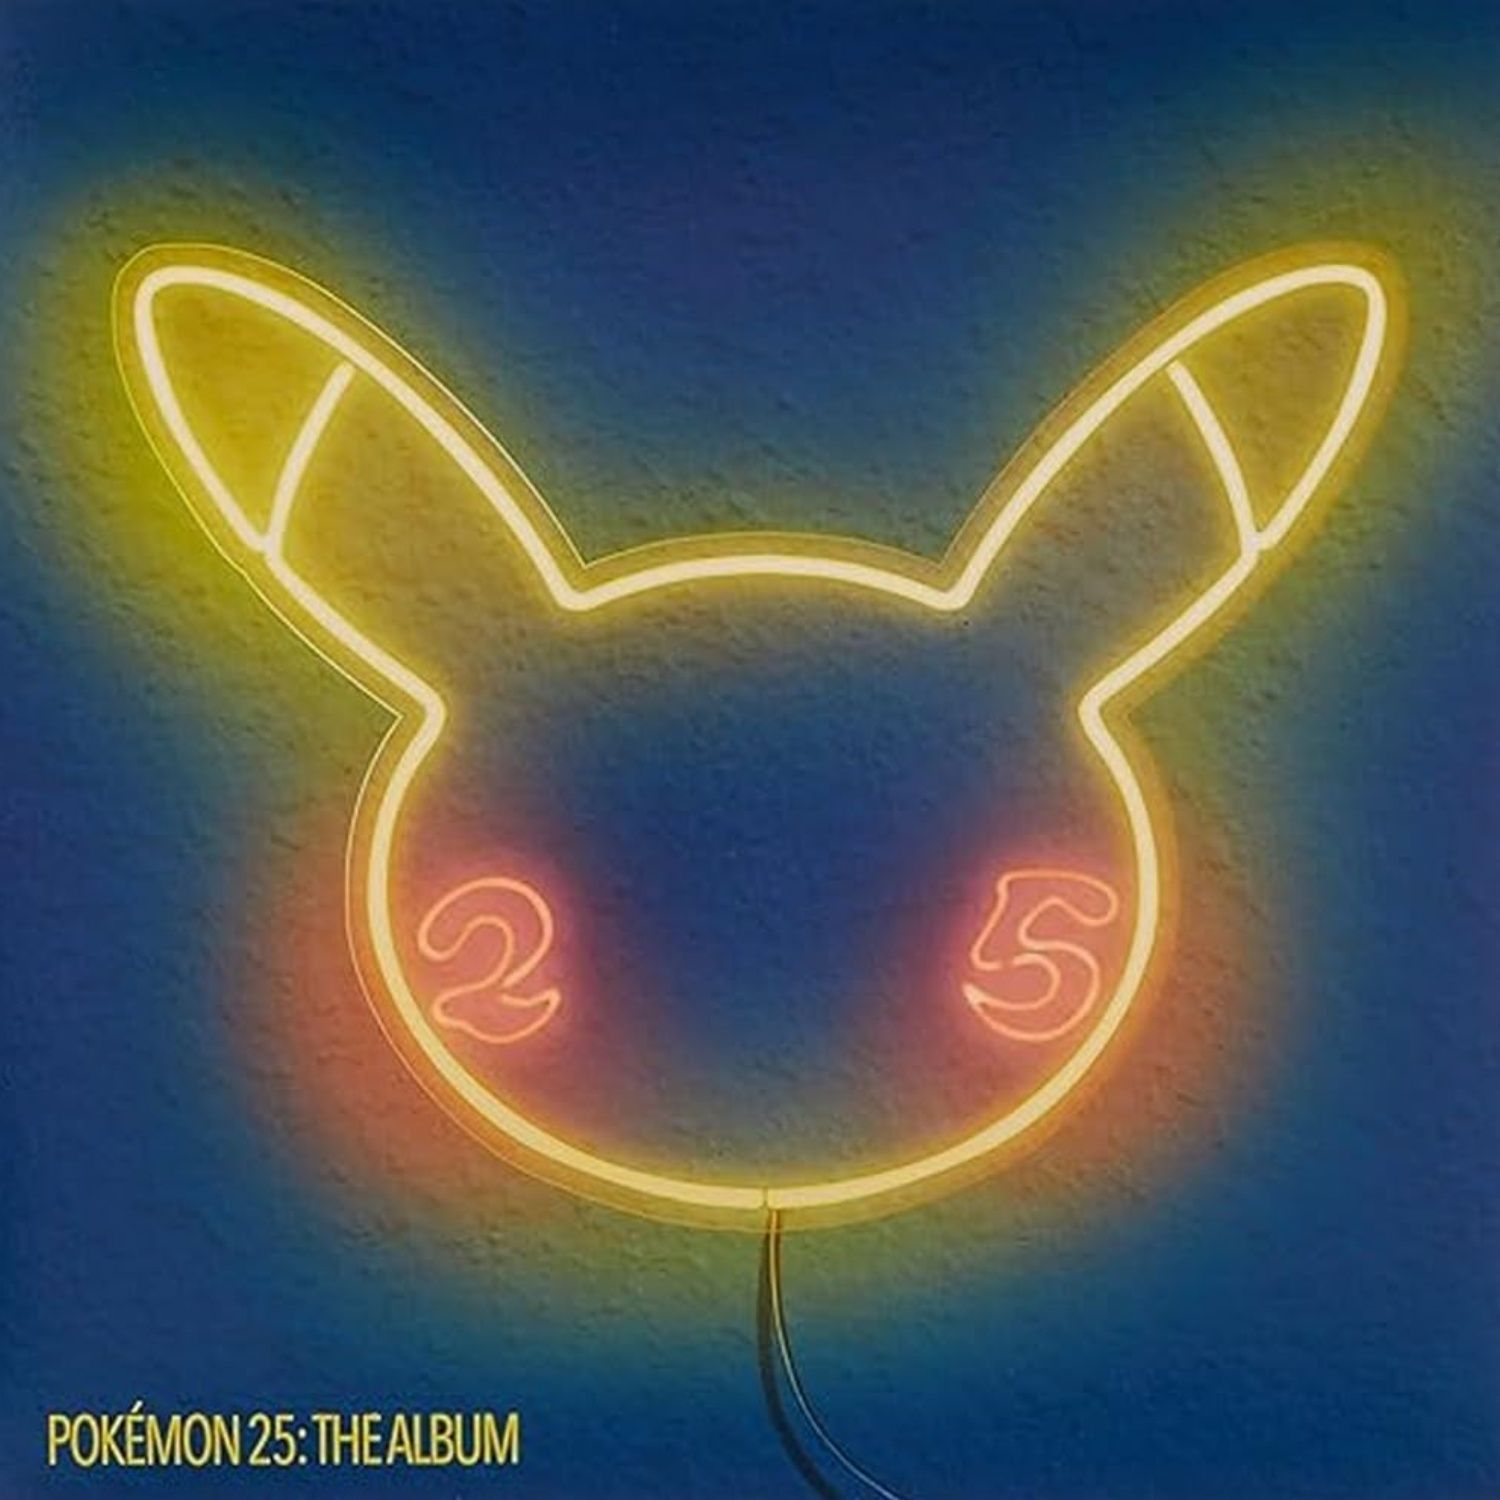 Pokemon 25: The Album - Various Artists - Pop Vinyl LP (Capitol)